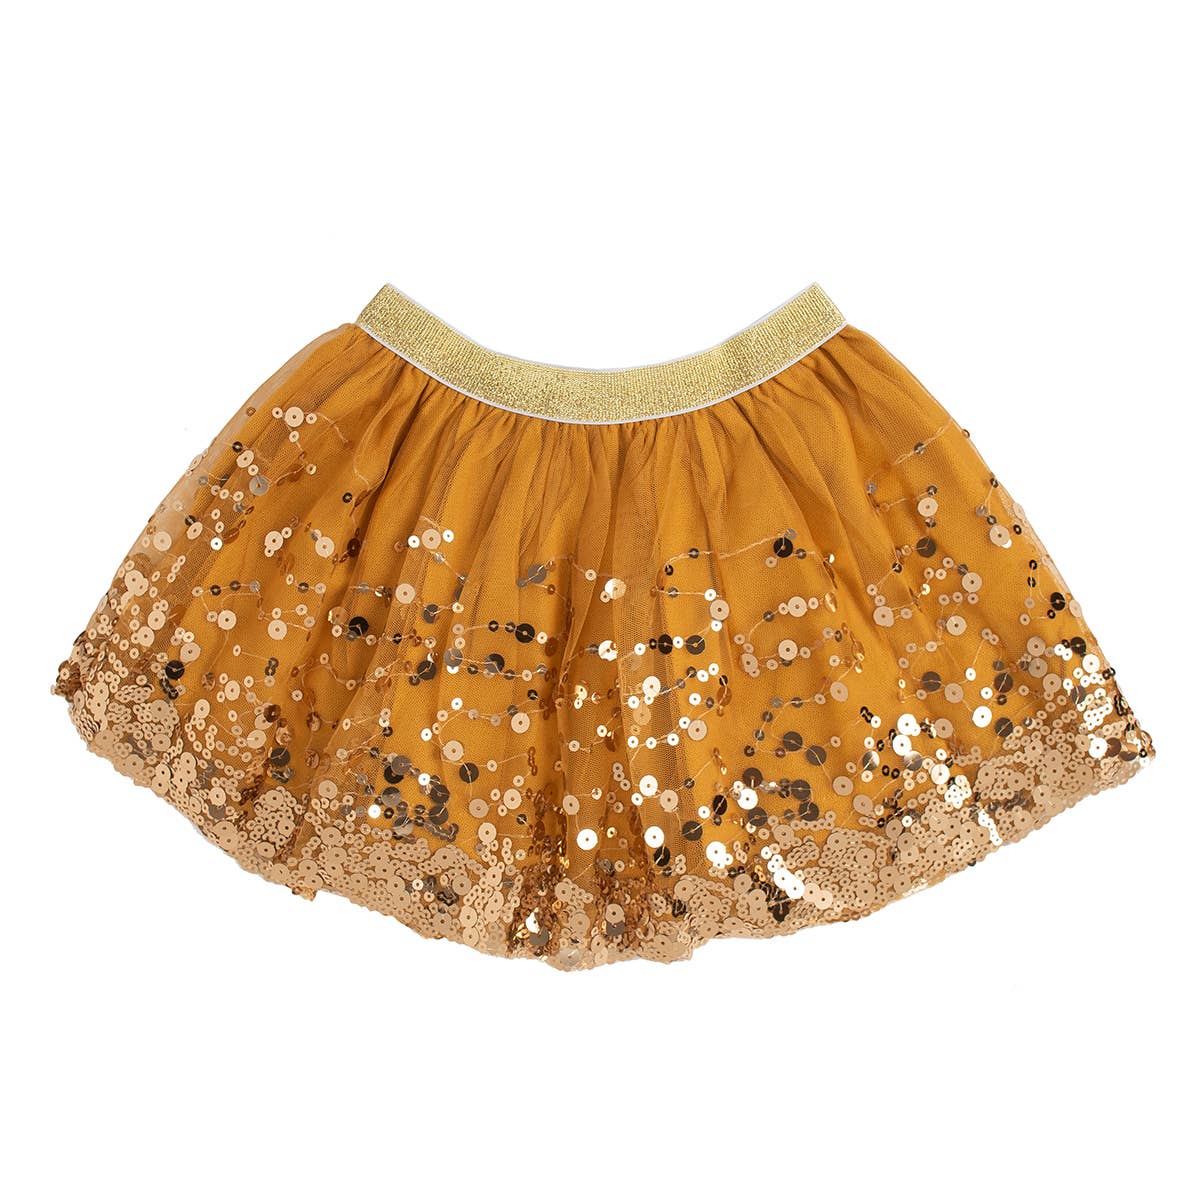 Spice Sequin Tutu - Dress Up Skirt - Kids  Tutu